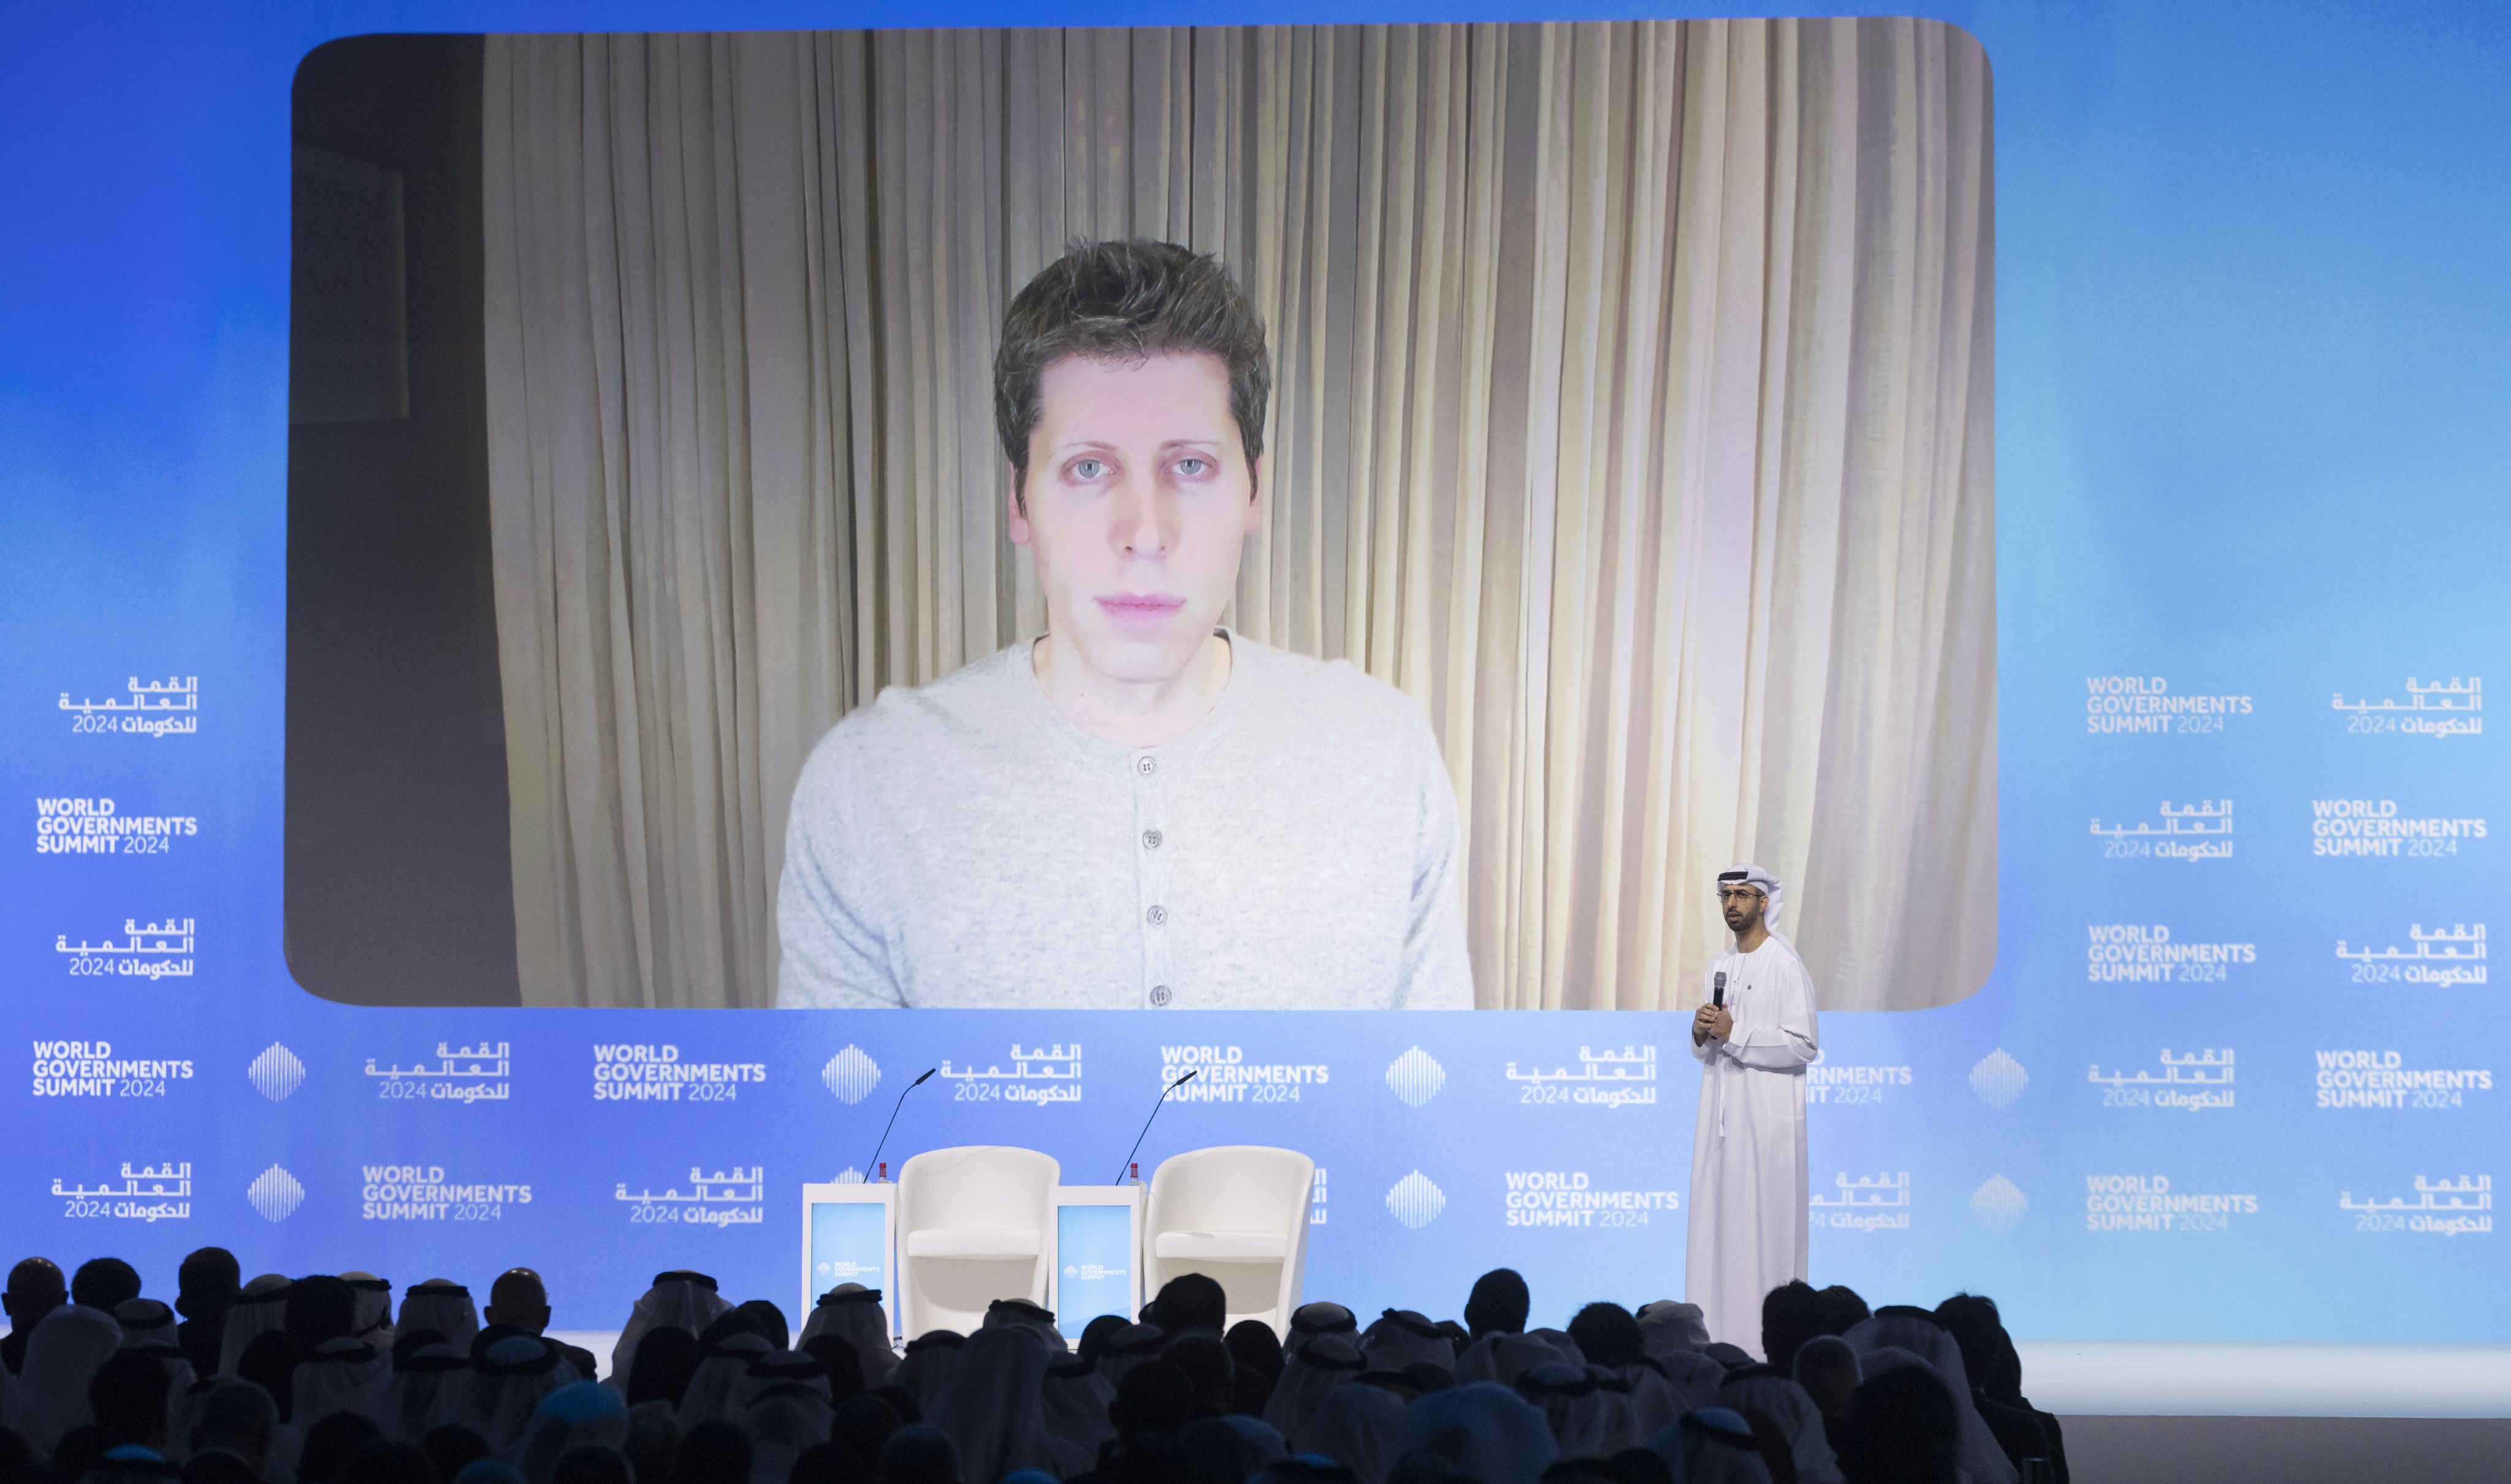 UAE Backs Sam Altman's Idea to Turn Itself Into AI Testing Ground